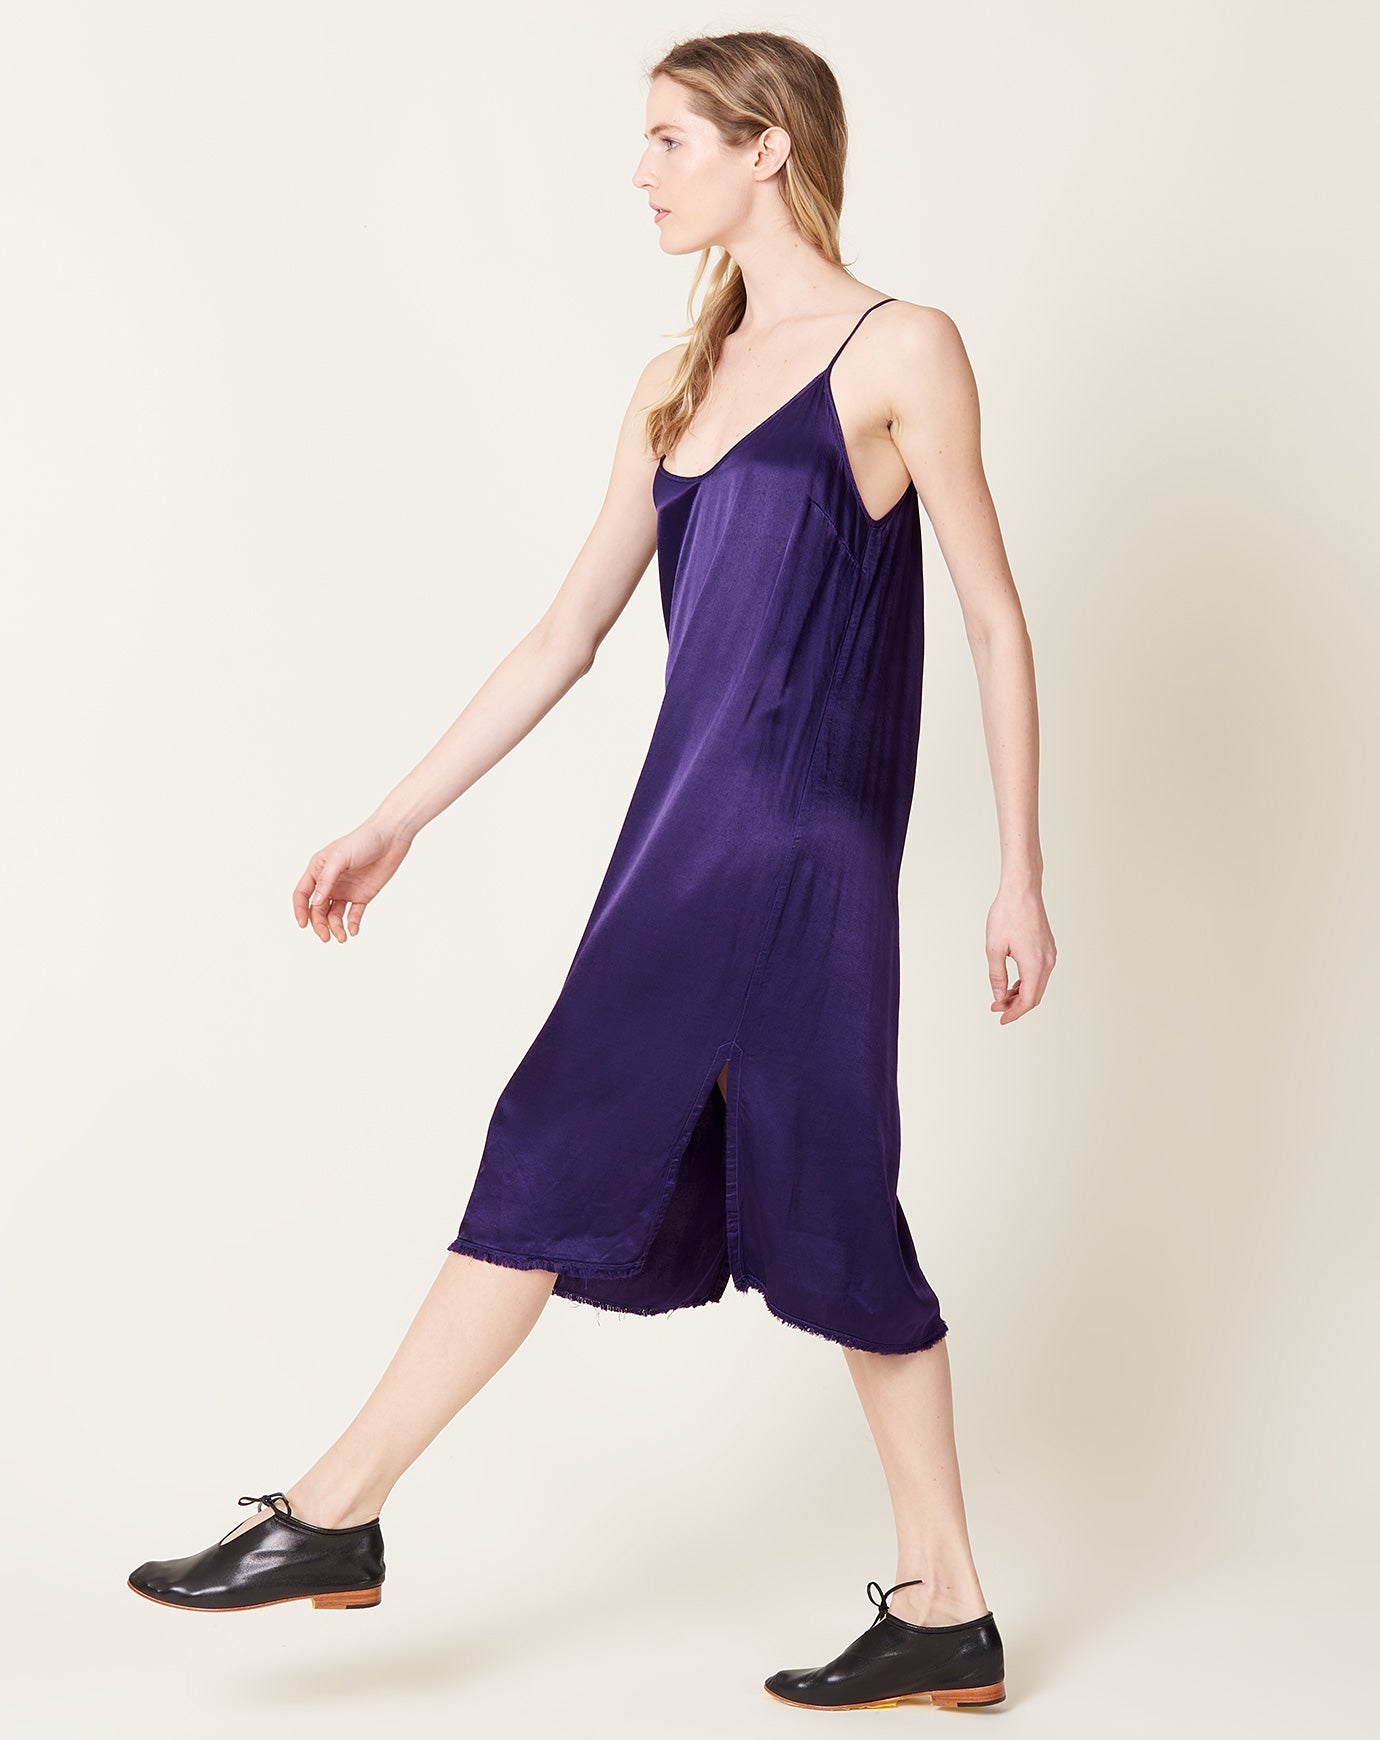 Raquel Allegra Eve Slip Dress in Bright Violet